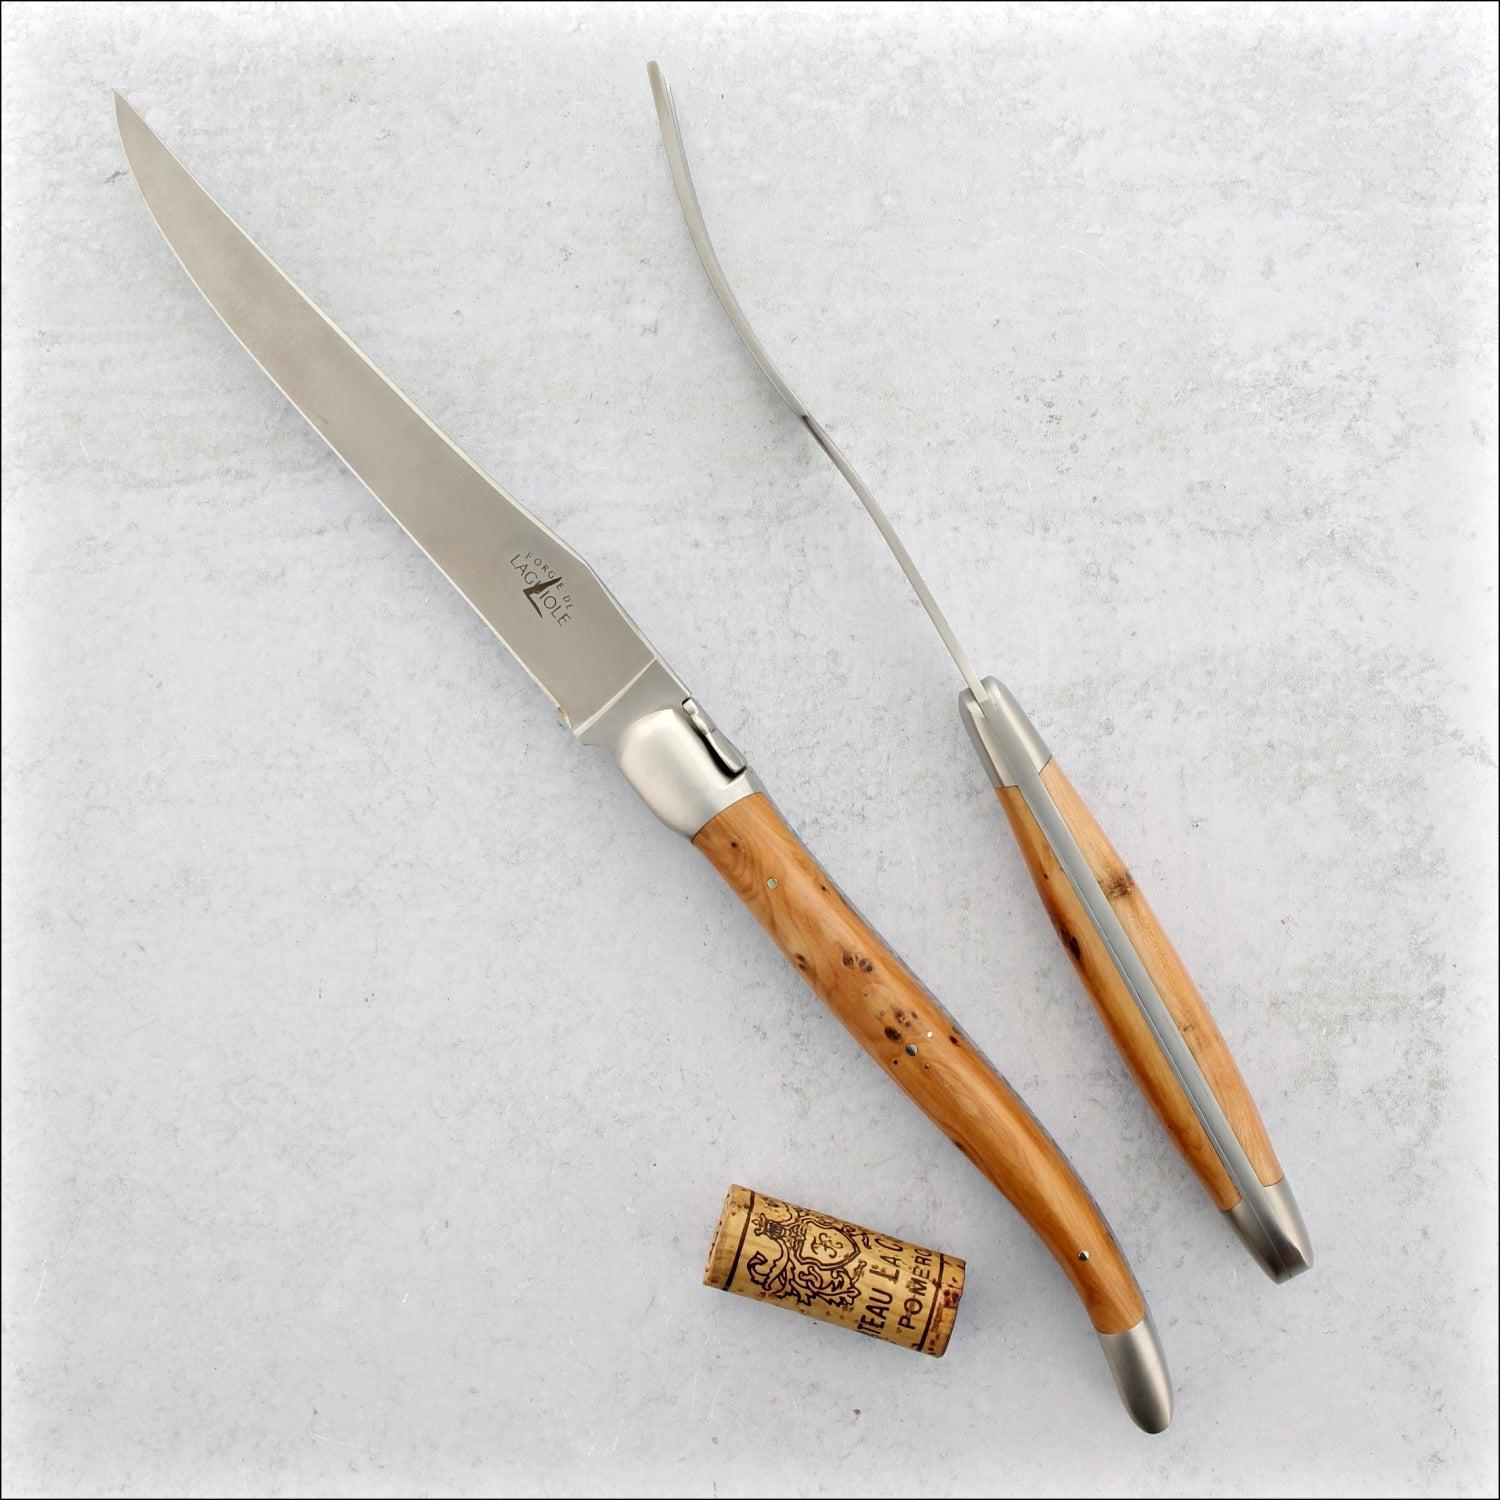 Forge de Laguiole 6 Piece Steak Knife Set Assorted Wood Handle Shiny Finish